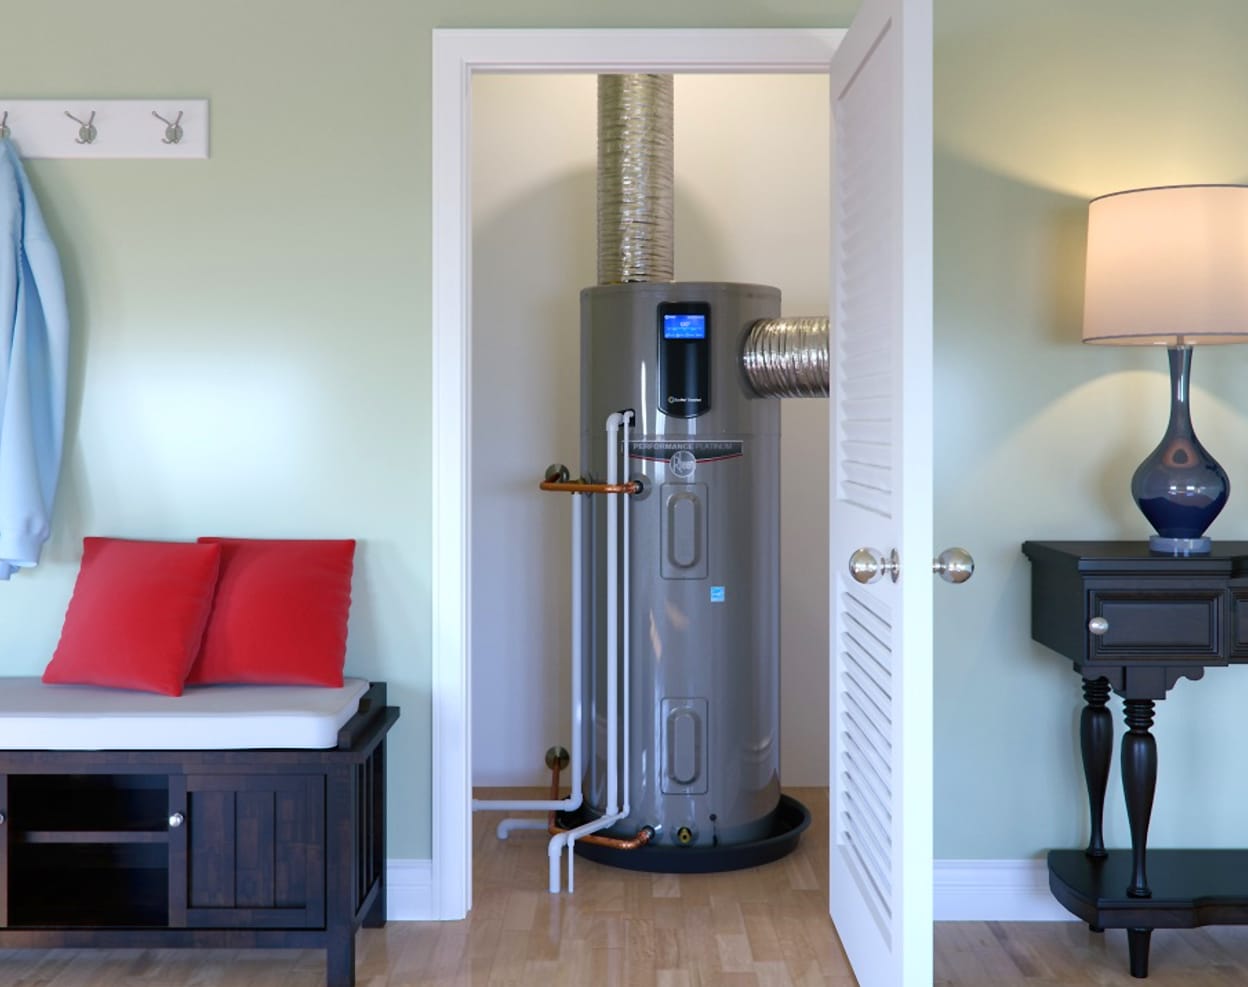 4 Best Hybrid Water Heaters InDetail Reviews (Feb. 2021)